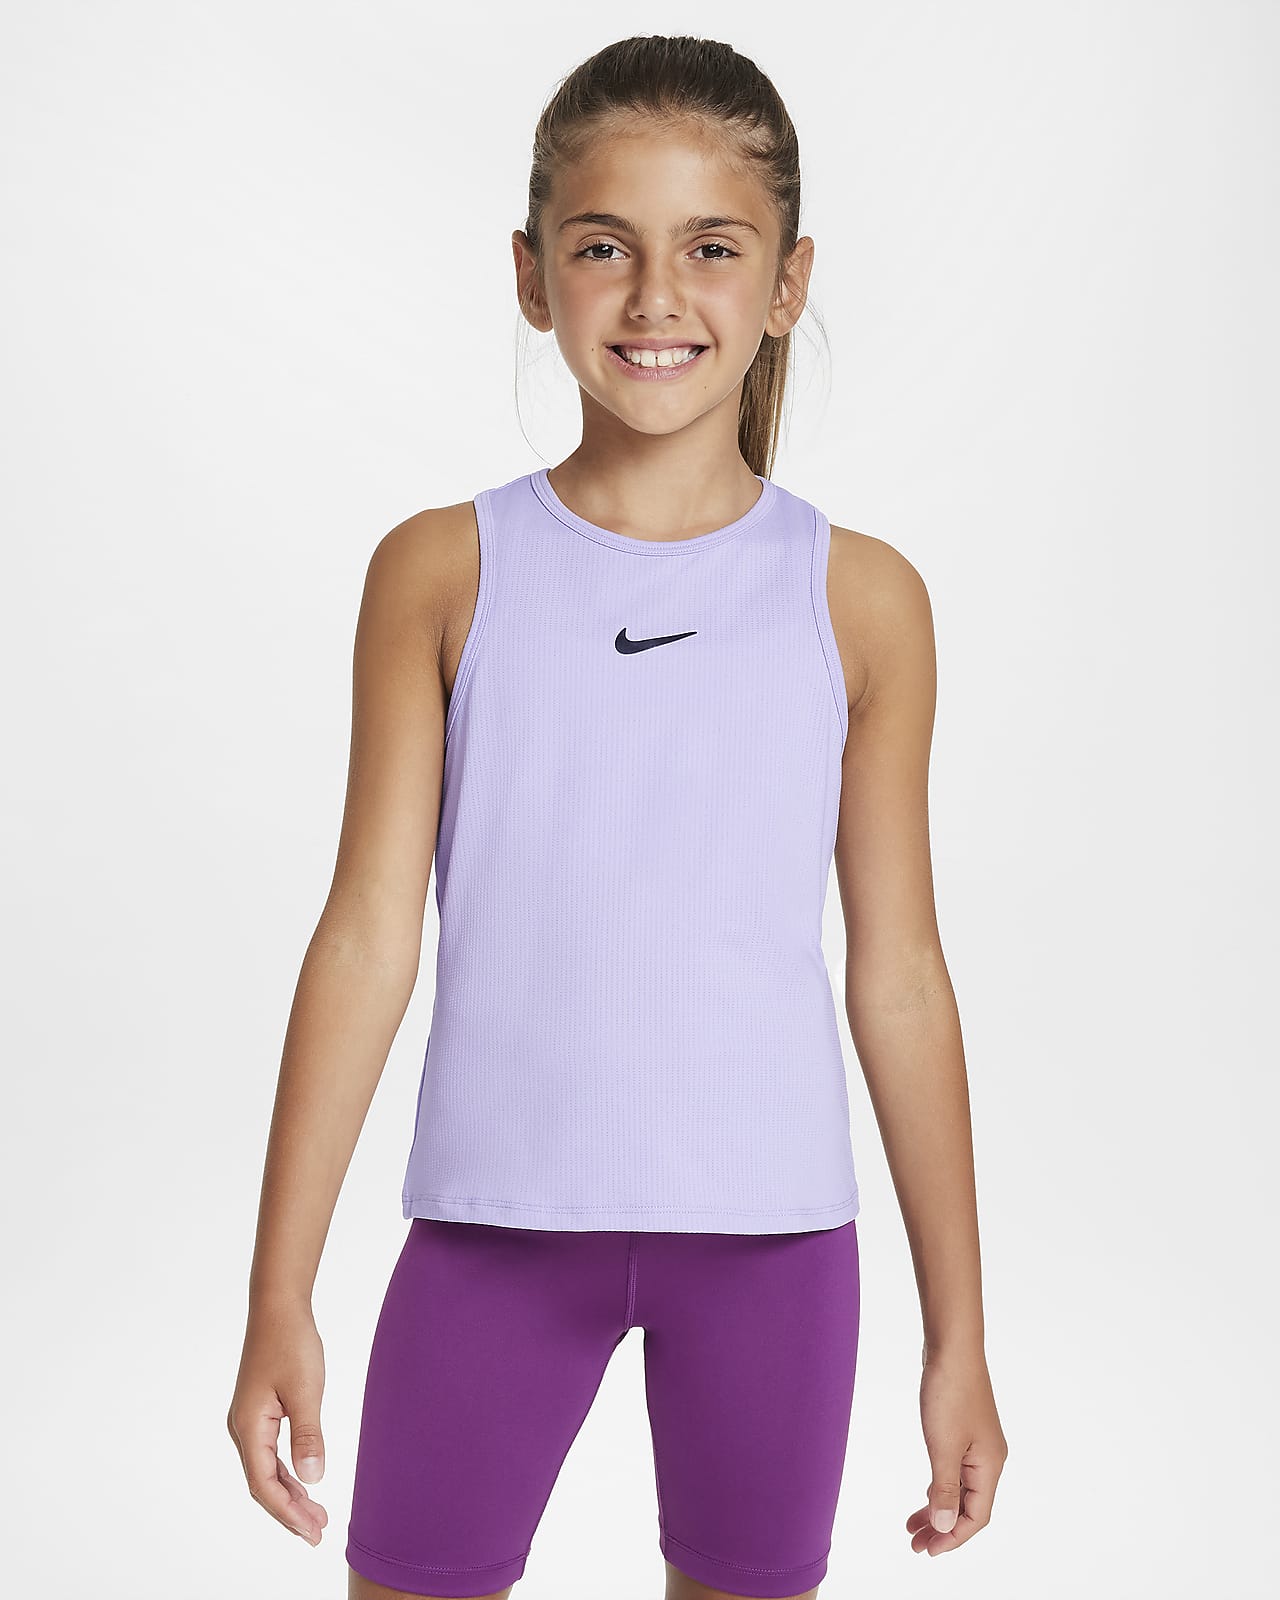 Nike Victory Dri-FIT tennistanktop voor meisjes